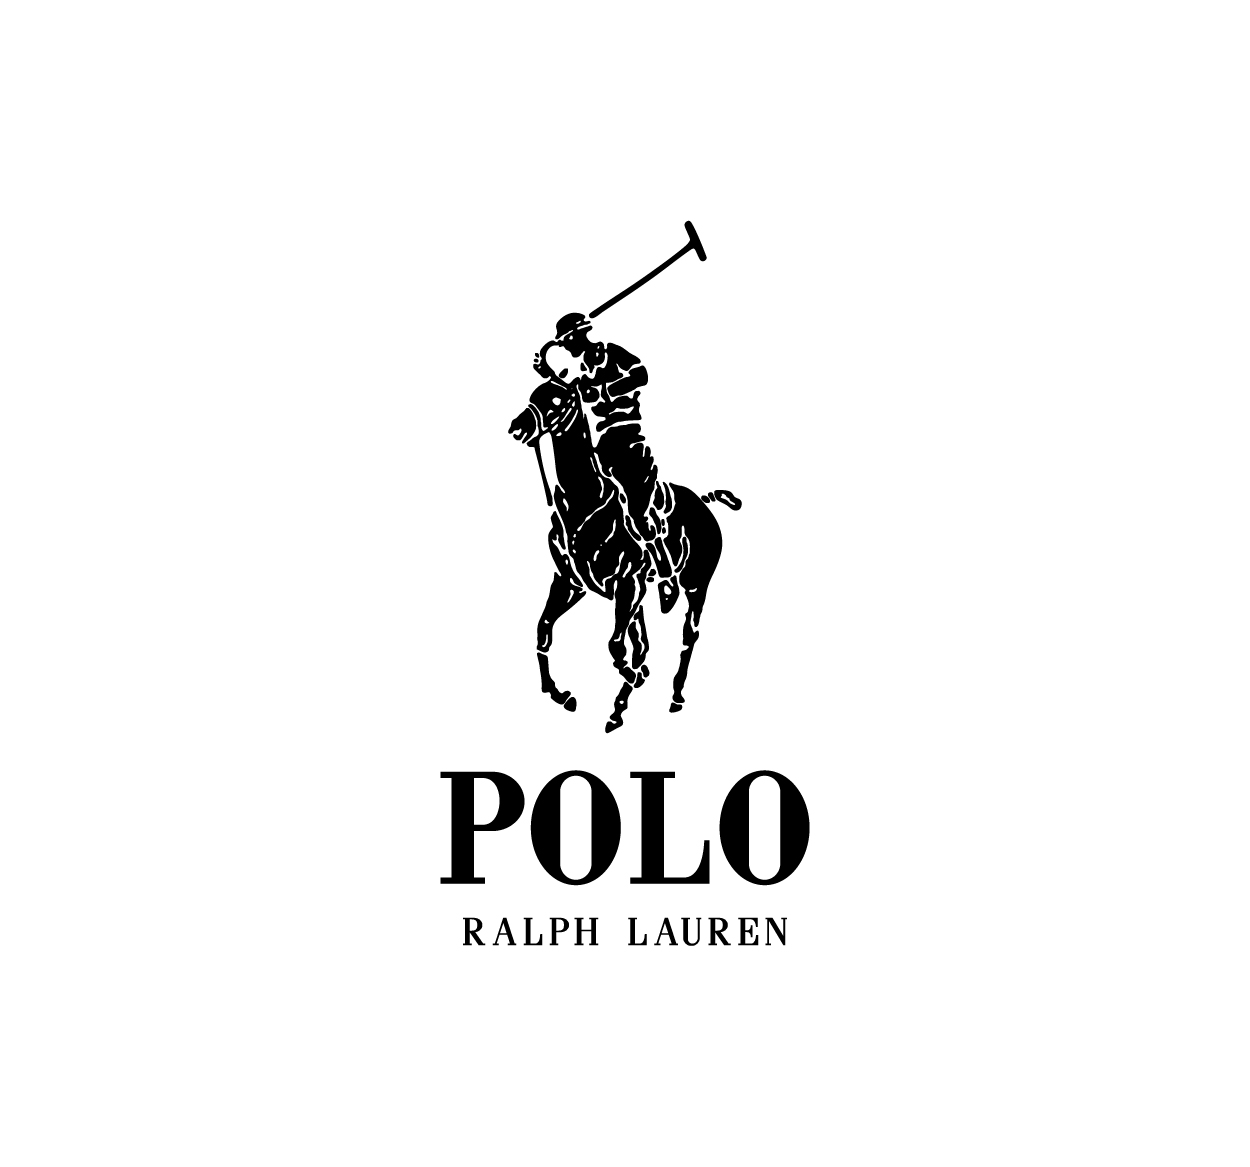 Free High-Quality Polo logo vectors for Creative Design